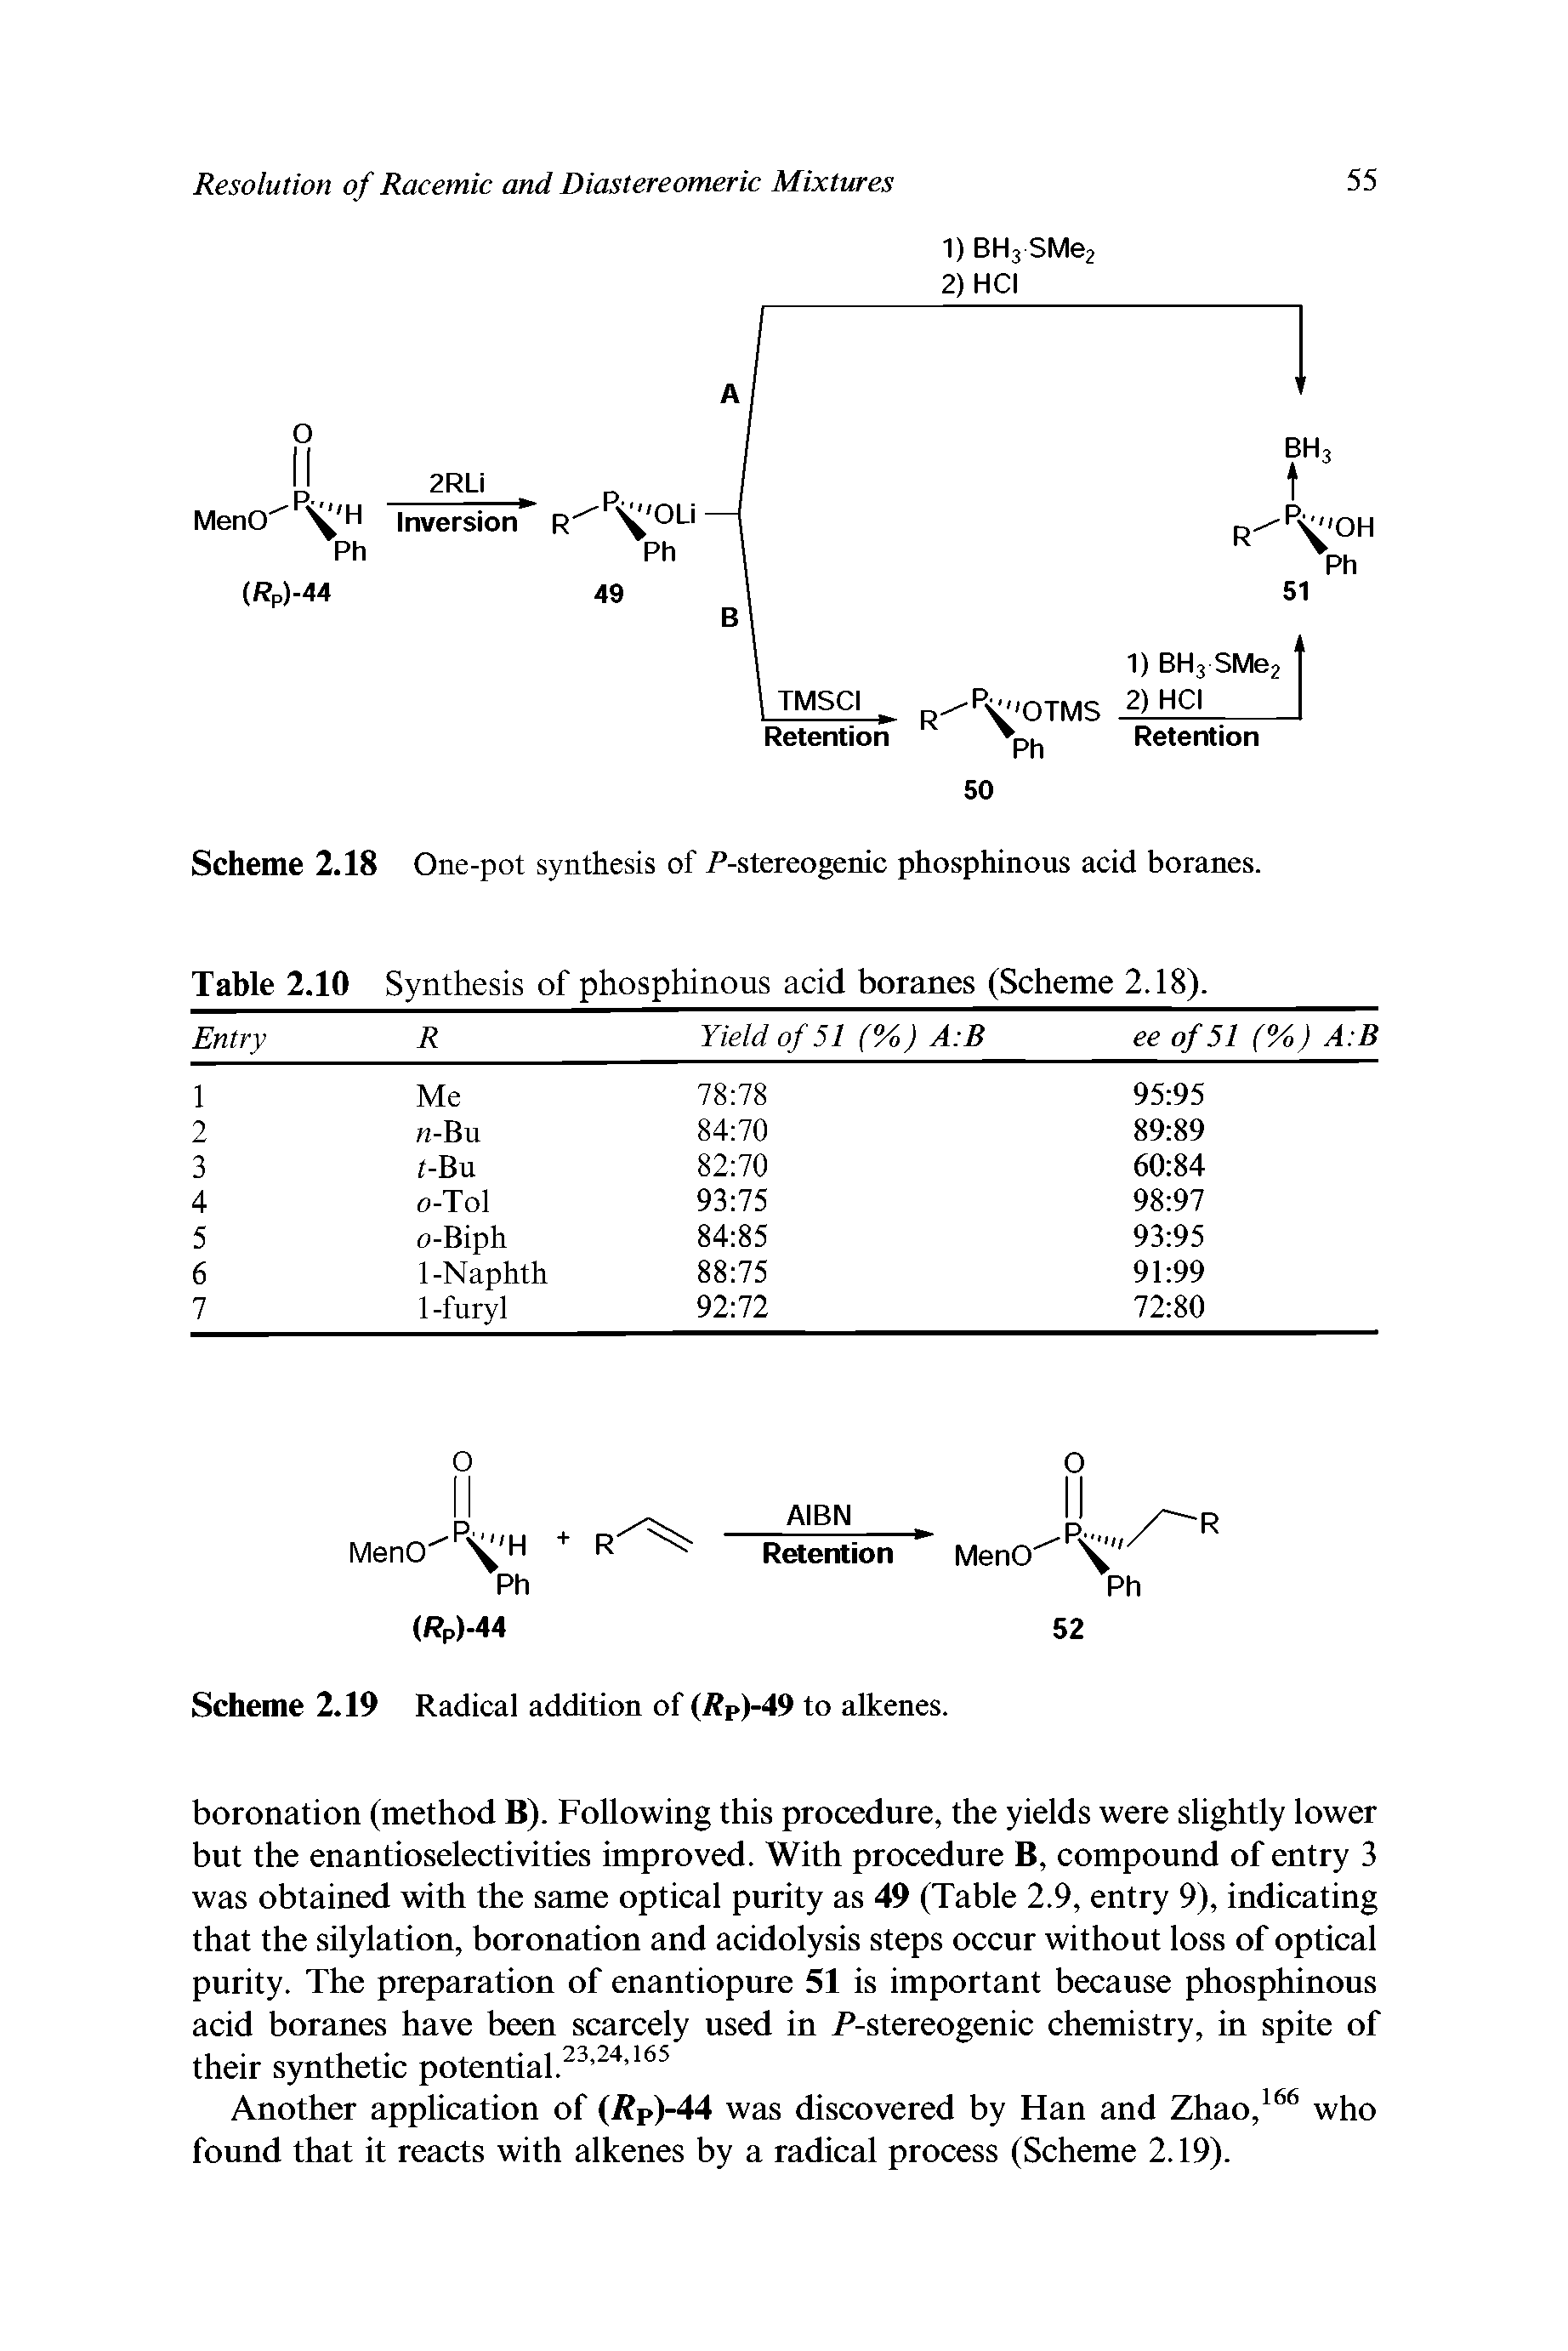 Table 2.10 Synthesis of phosphinous acid boranes (Scheme 2.18).